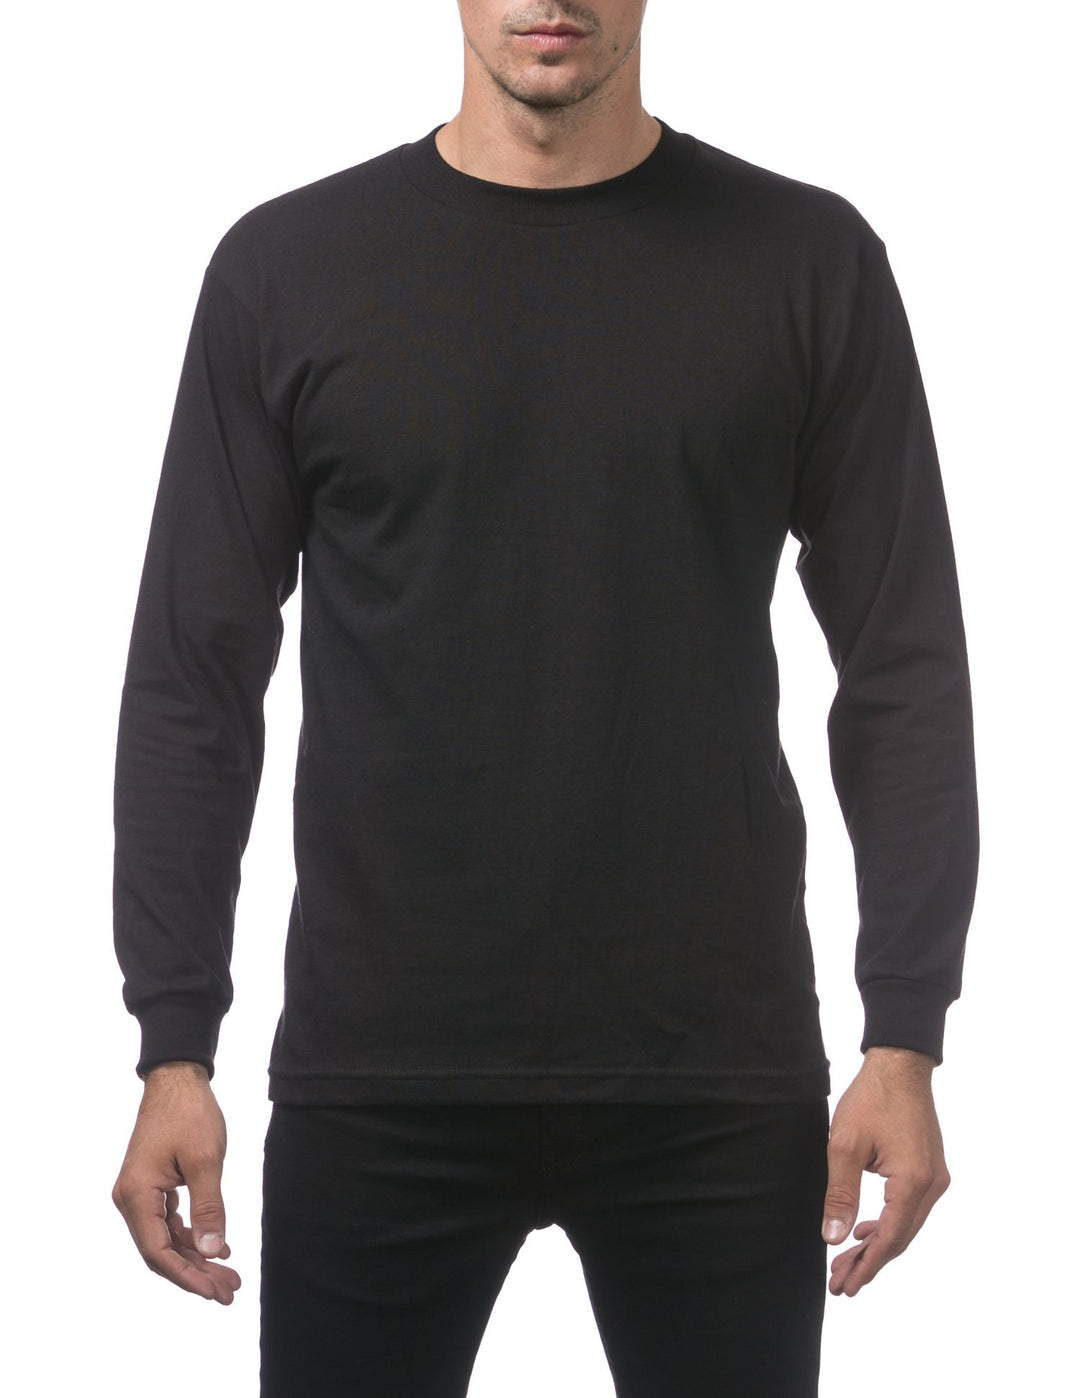 Pro Club Men's Comfort Cotton Long Sleeve T-Shirt Black